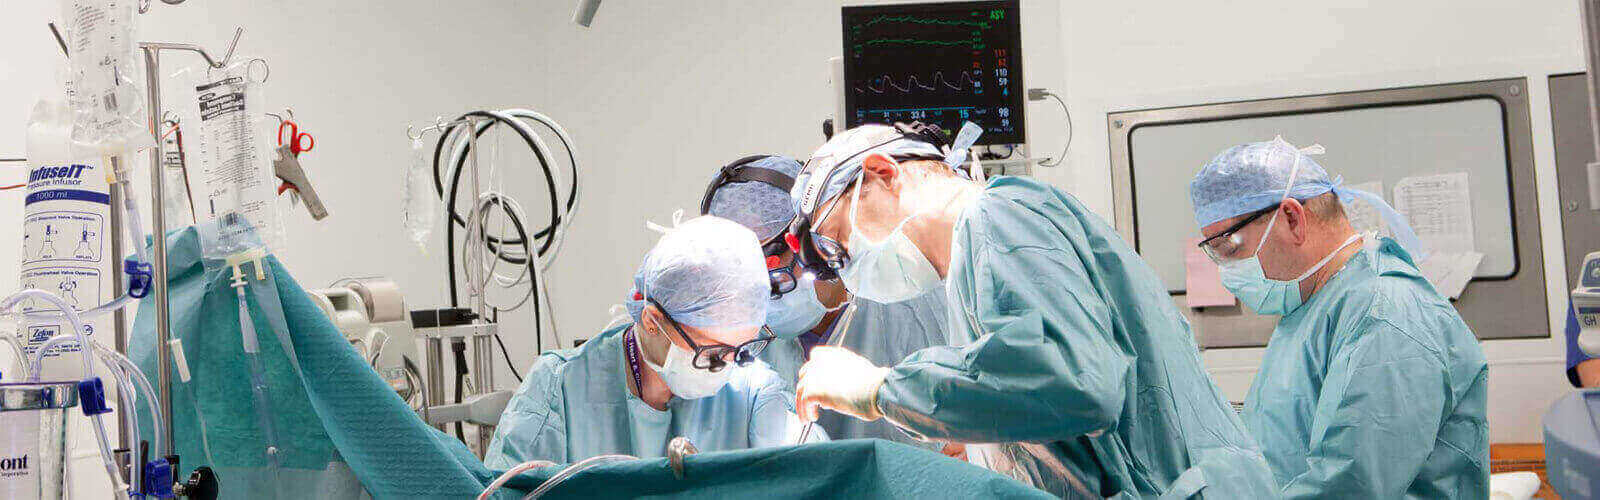 Heart Surgery Or Cardiac Surgery in America